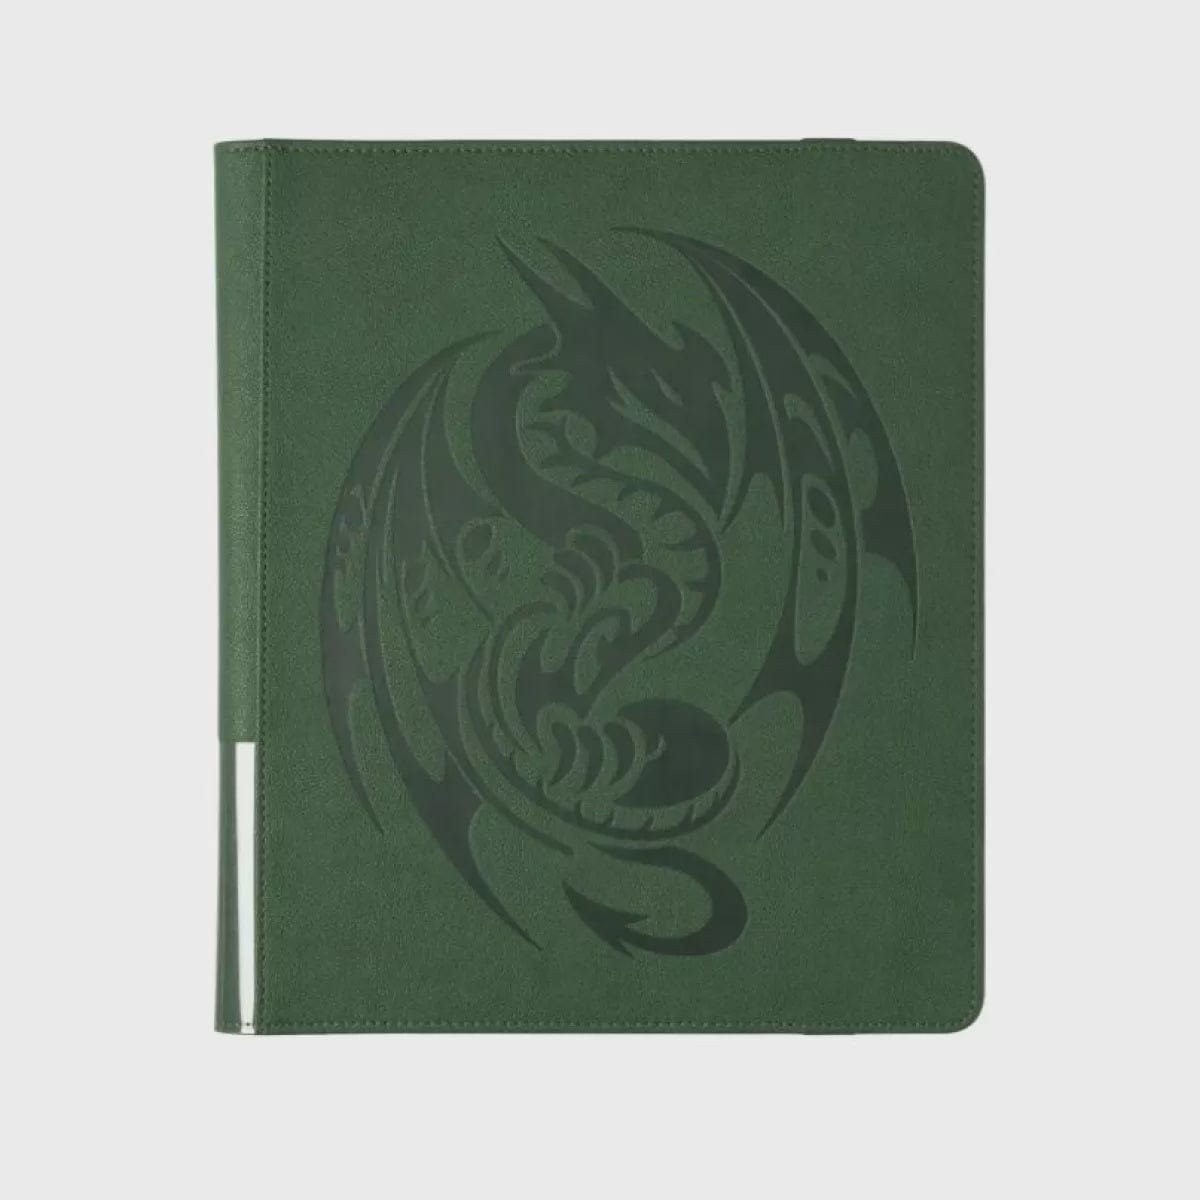 Dragon Shield card accessories Card Codex 360 - Dragon Shield - Forest Green